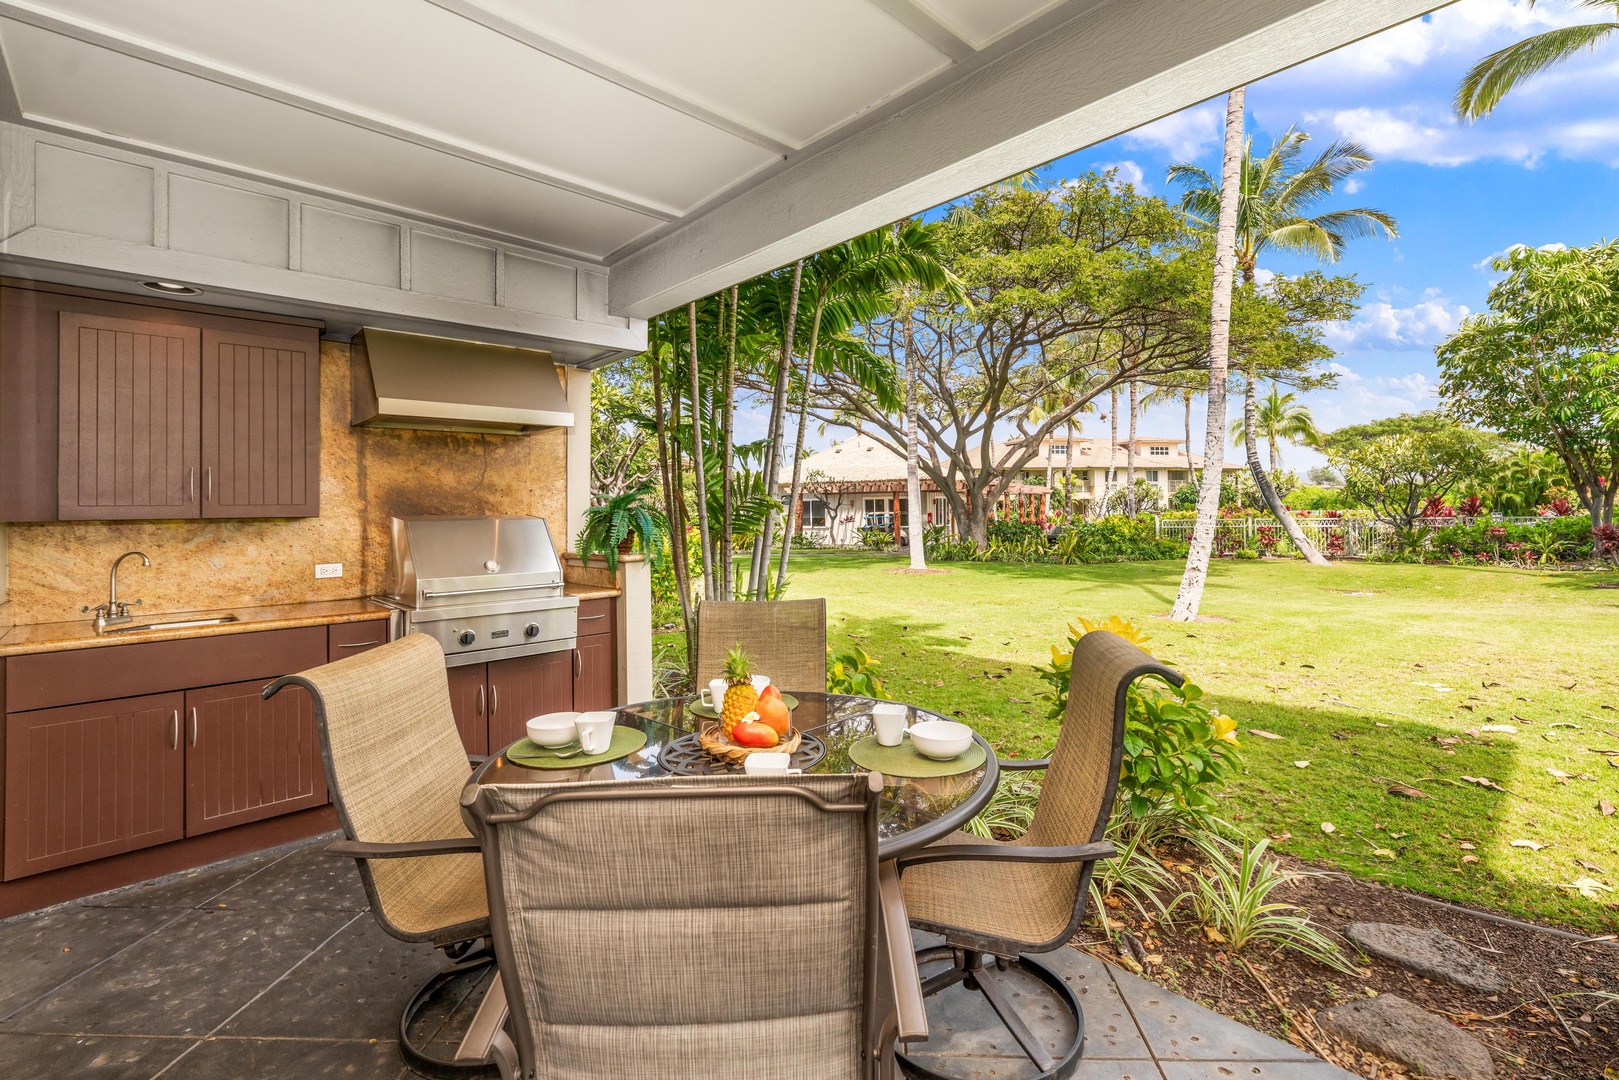 B4 Waikoloa Beach Villas.  Includes Hilton Waikoloa Pool Pass for 2023